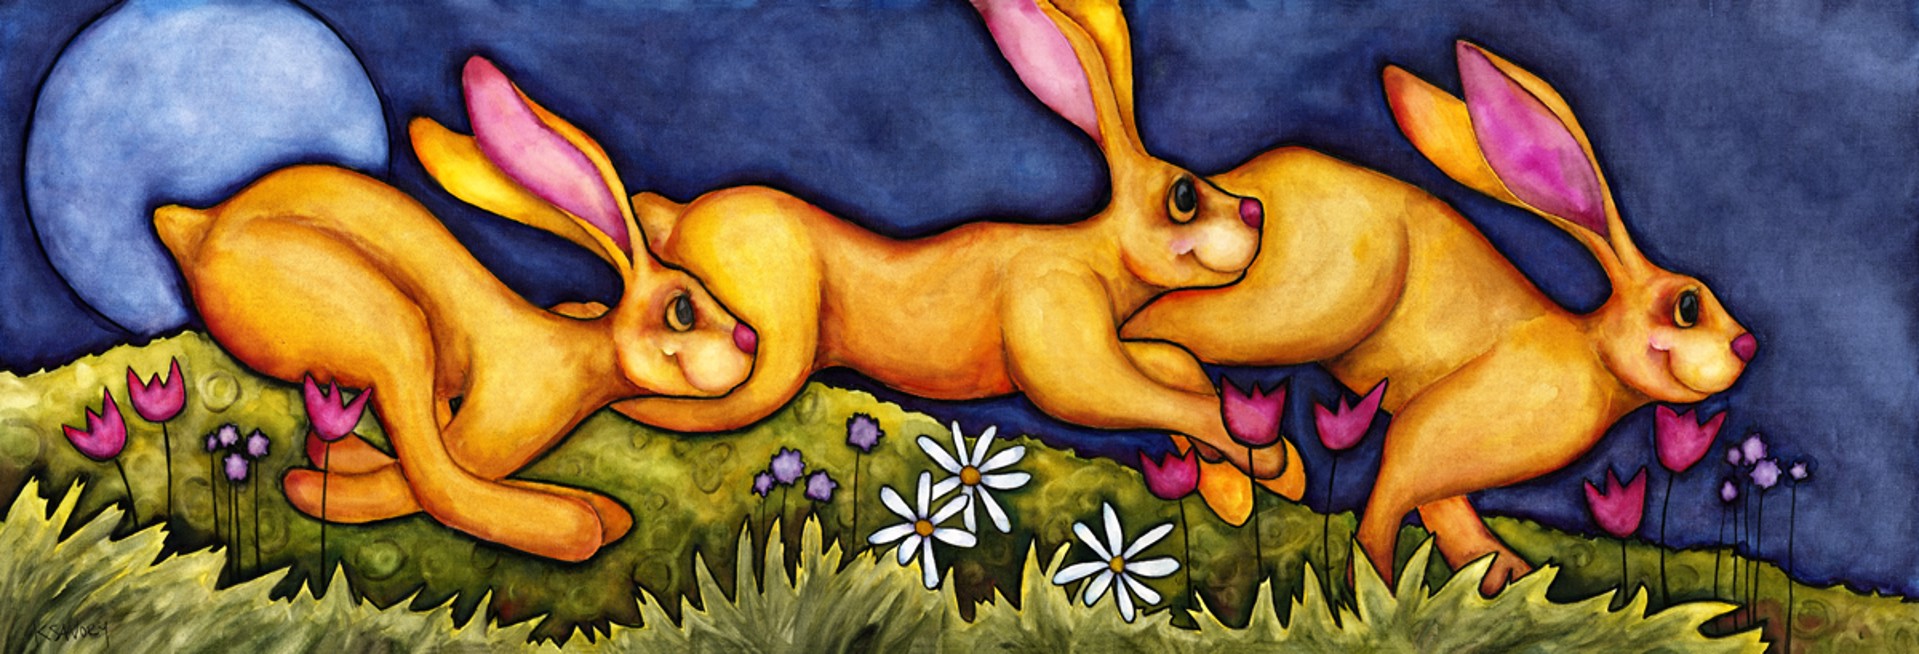 Run Rabbit Run by Karen Savory